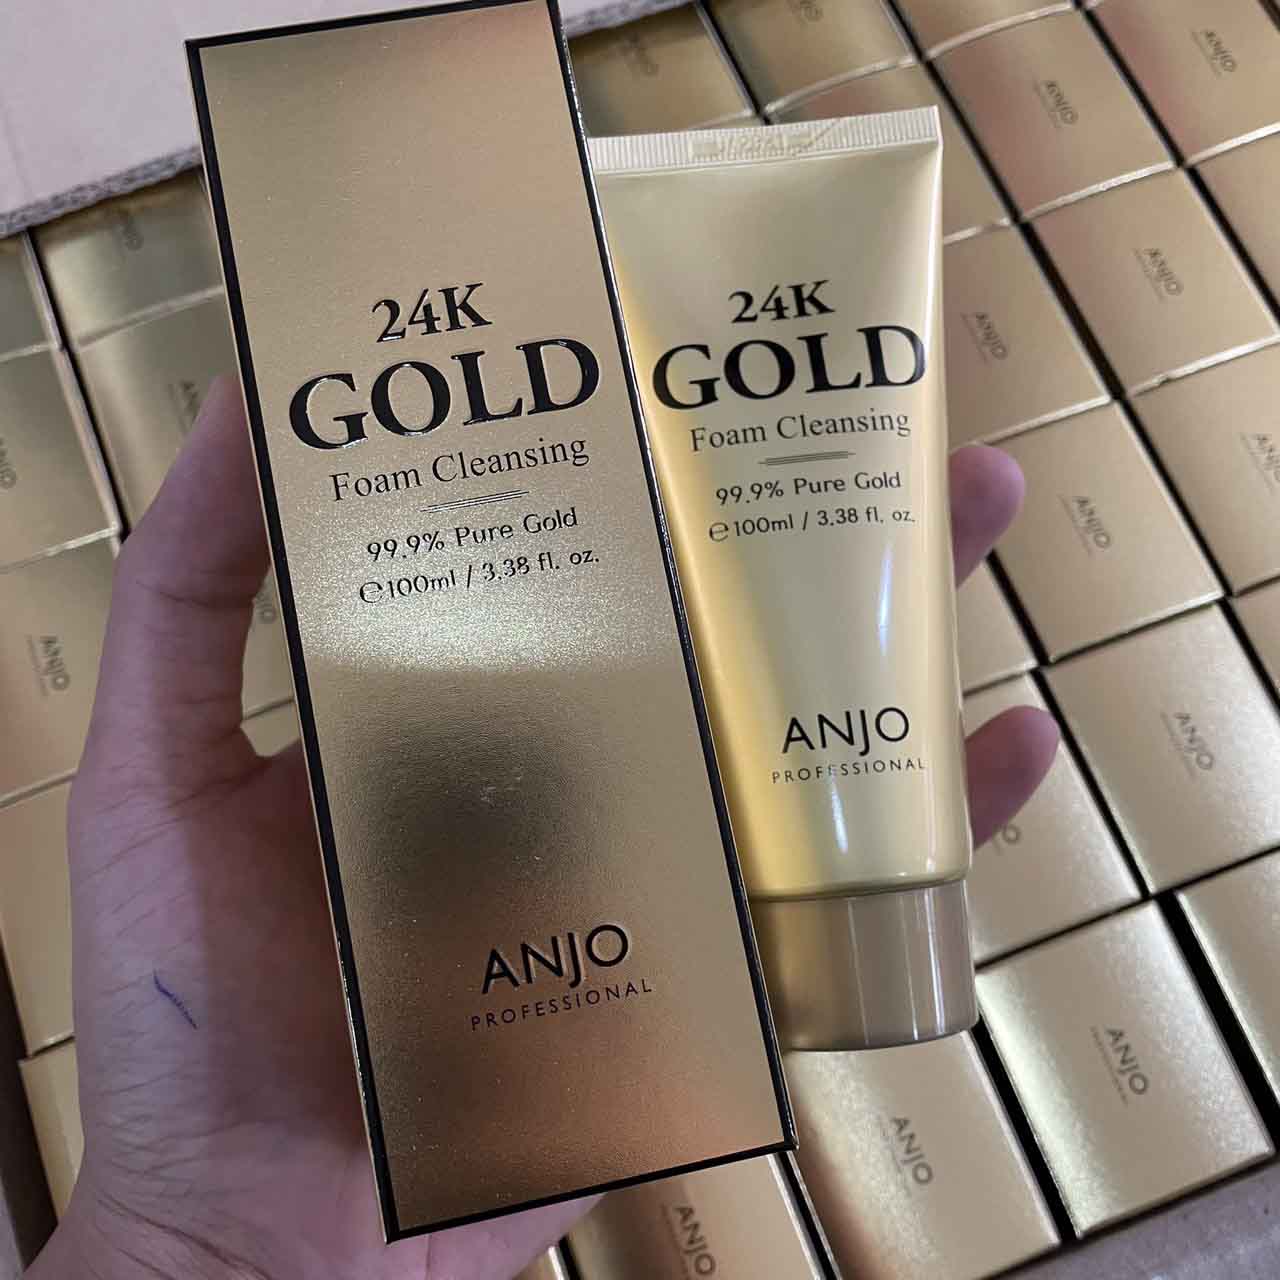 Anjo 24K Gold Foam Cleansing โฟมล้างหน้าทองคำบริสุทธิ์ 24k นำเข้าจากเกาหลี